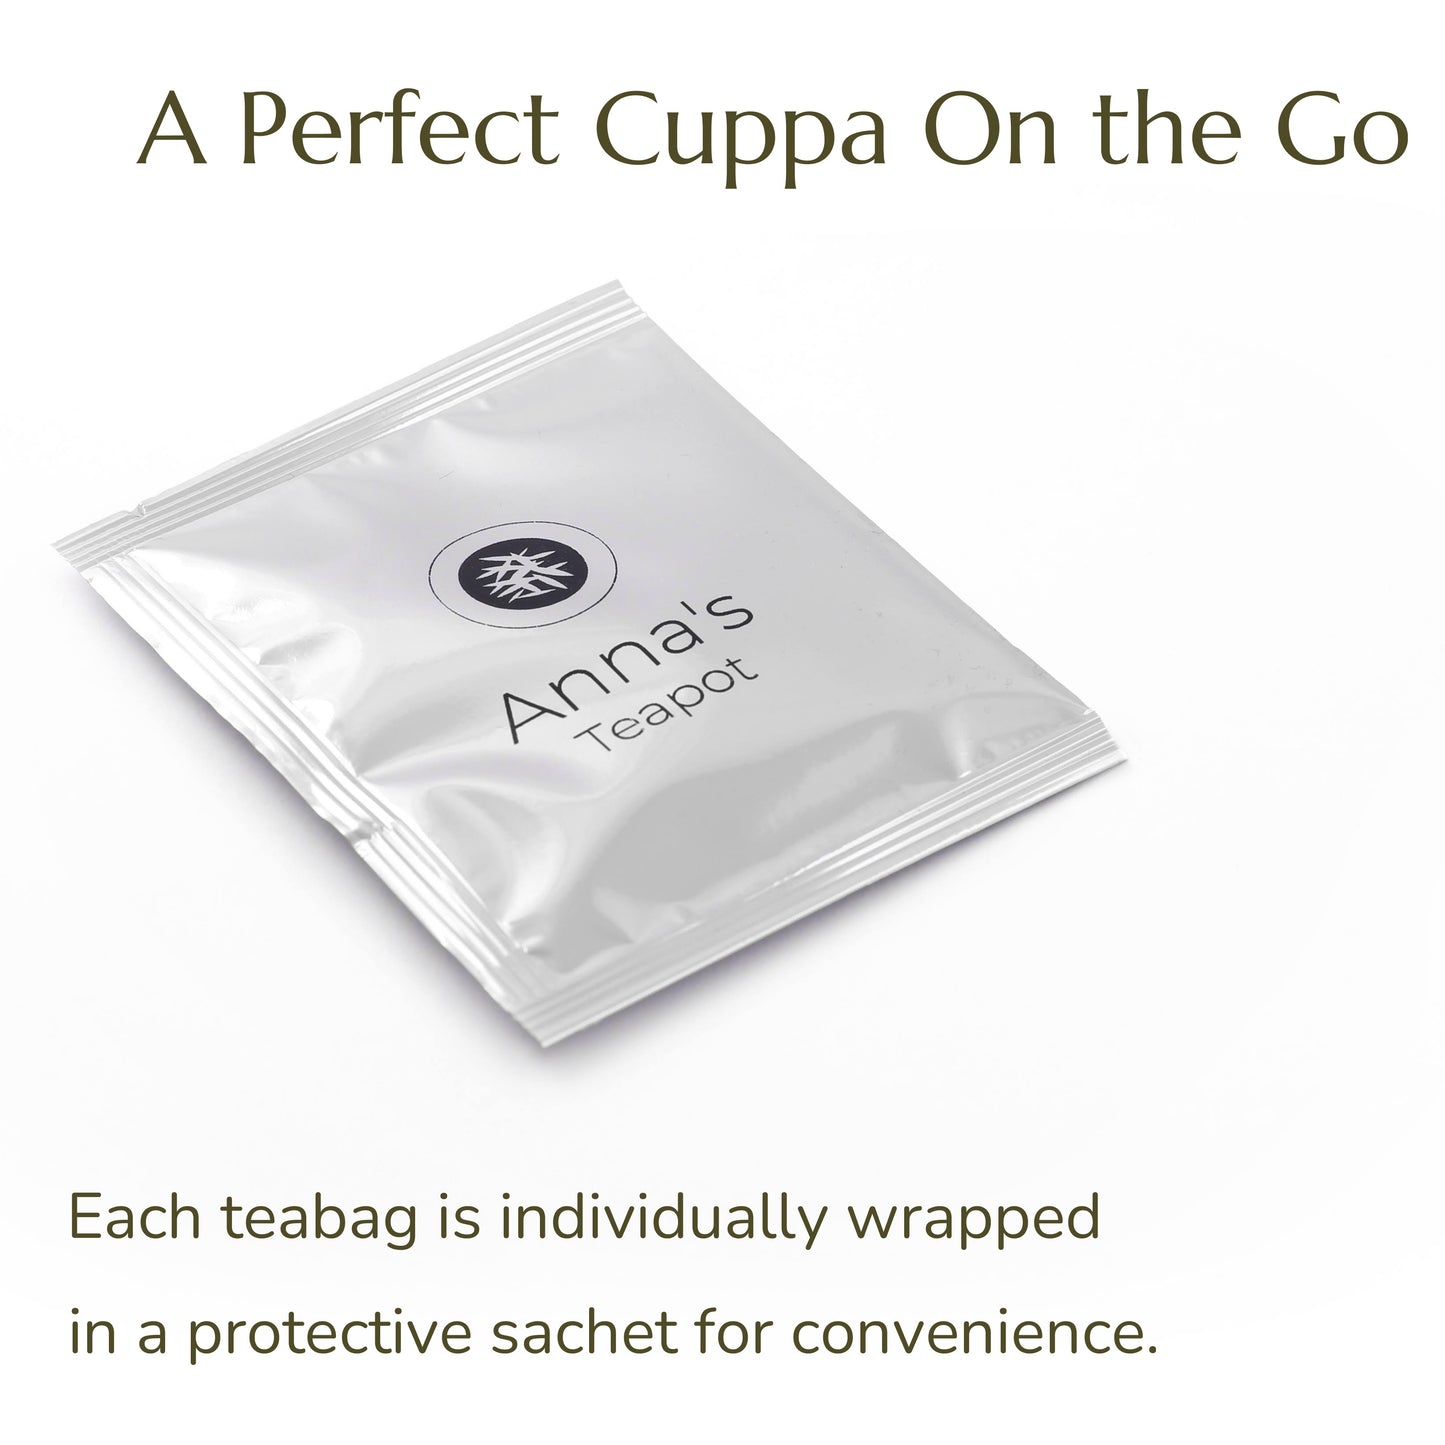 Anna's Teapot Matcha-Genmaicha - Organic Japanese Green Tea - Individually Wrapped Pyramid Tea Bags